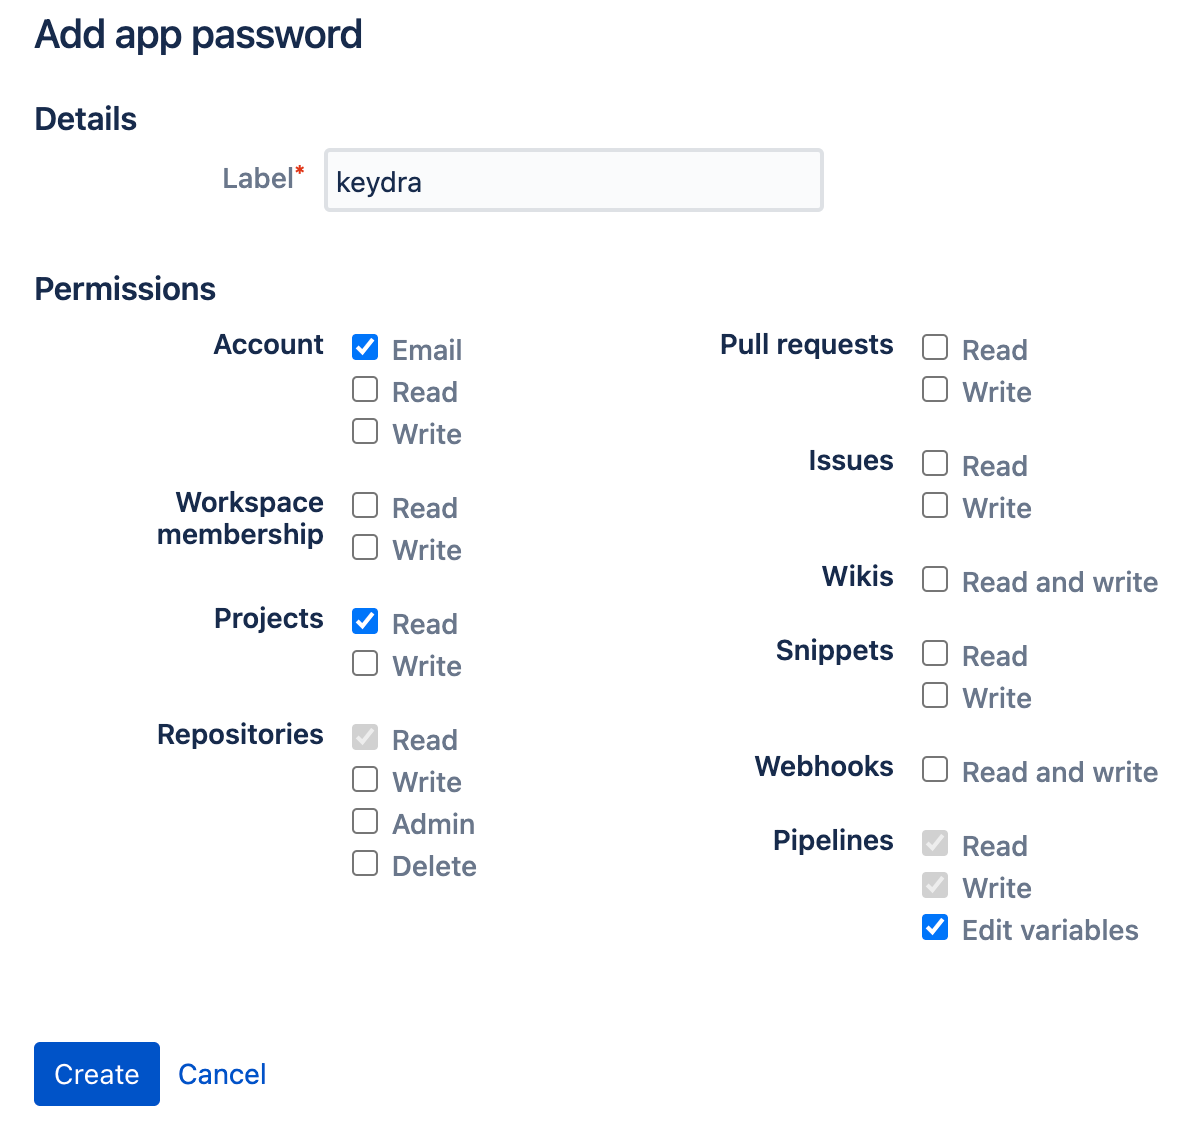 Configure App password permissions